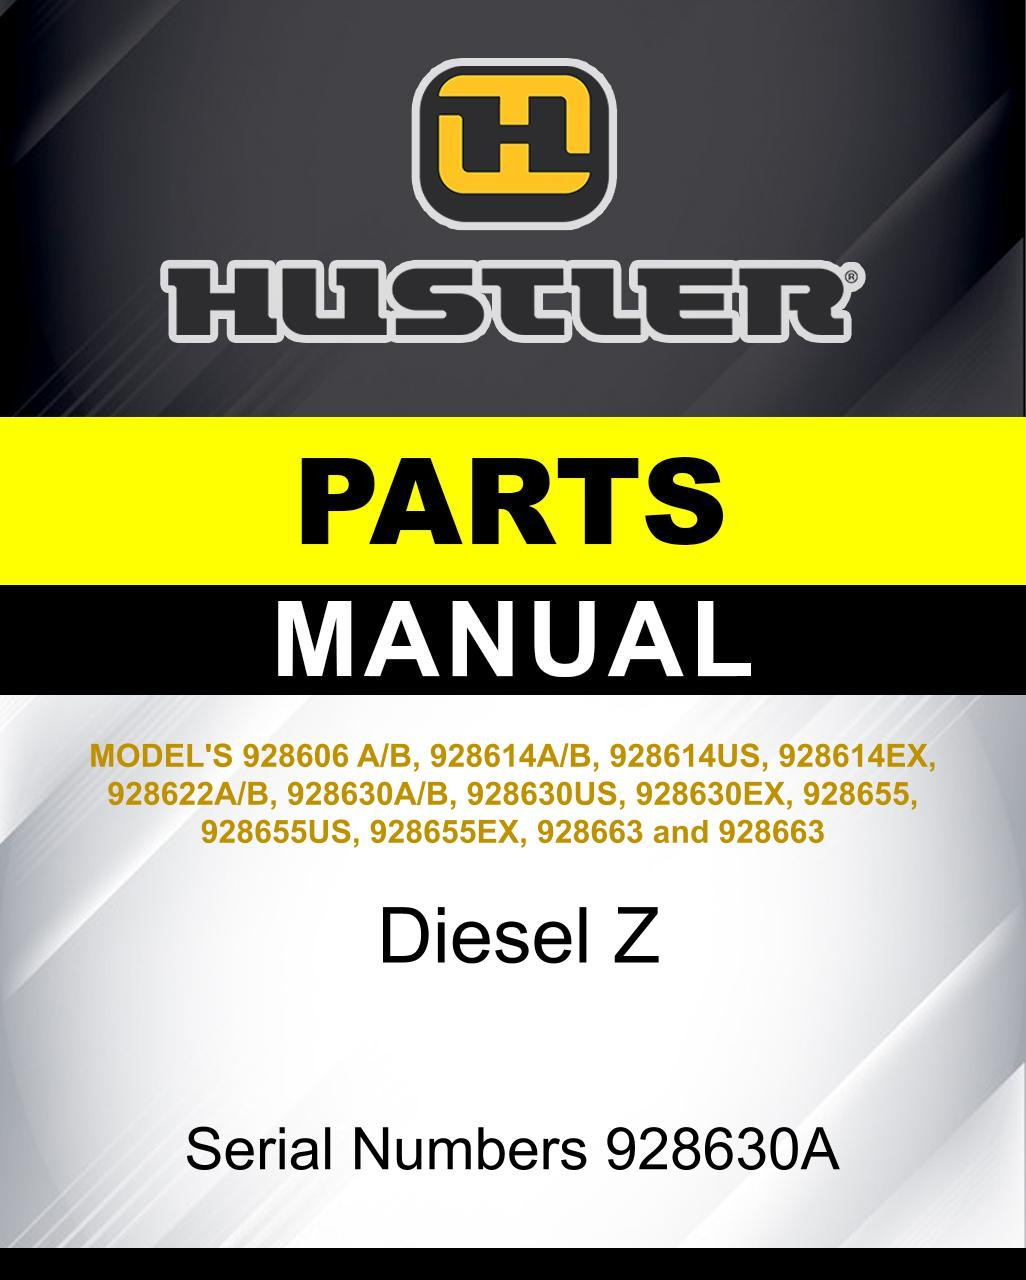 Hustler Diesel Z SN 928630A parts manual